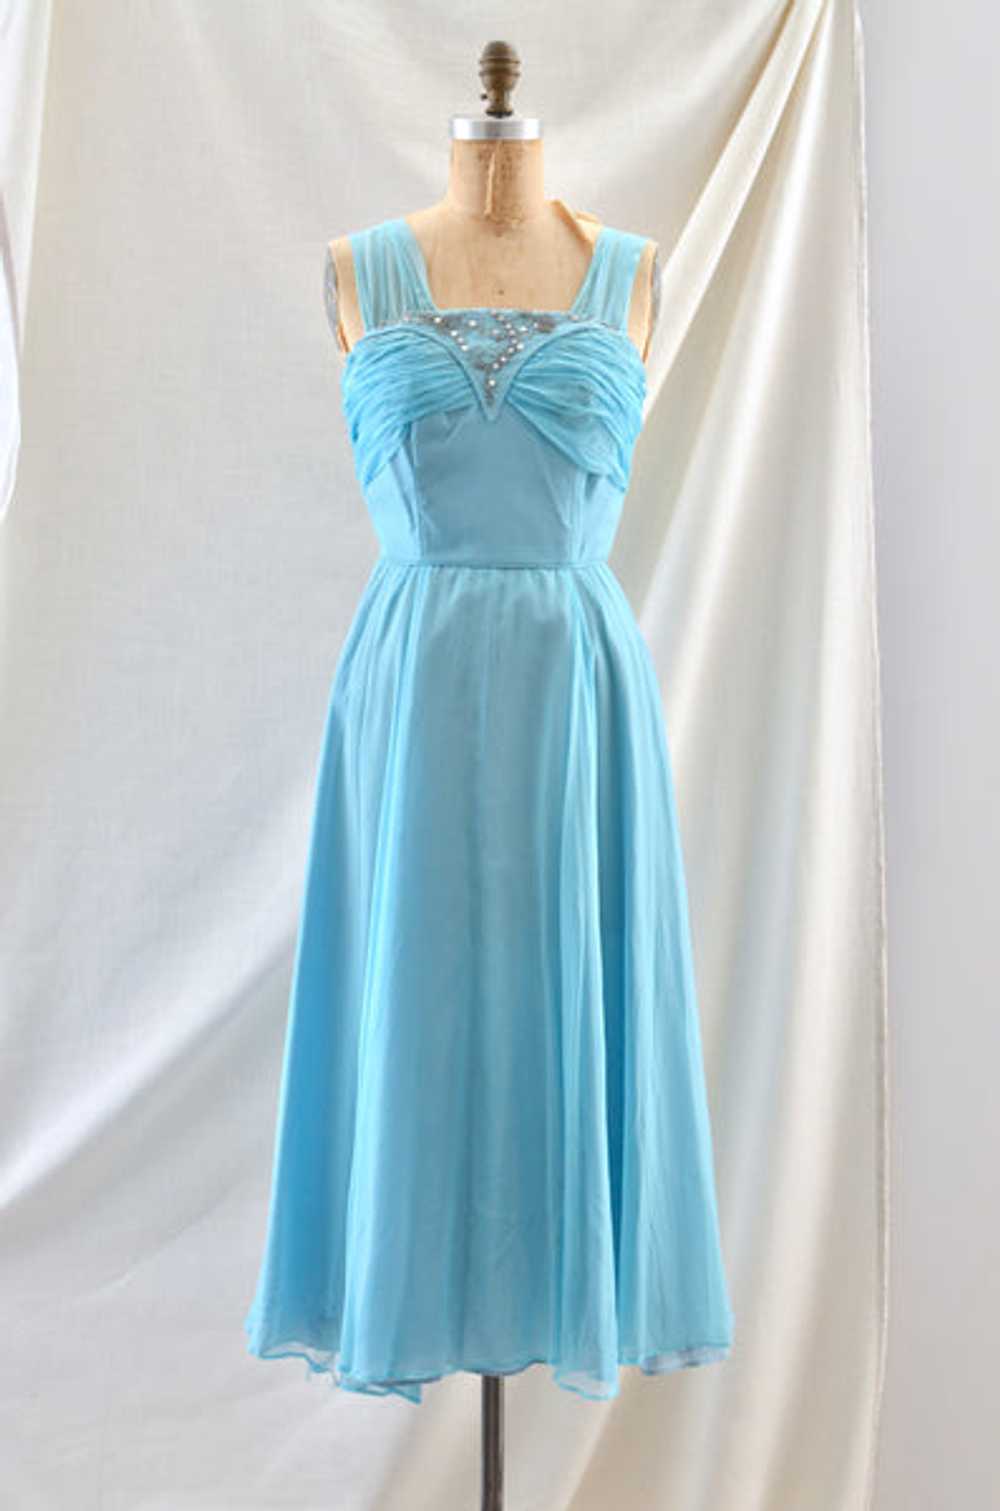 1950's Emma Domb Blue Dress - image 1